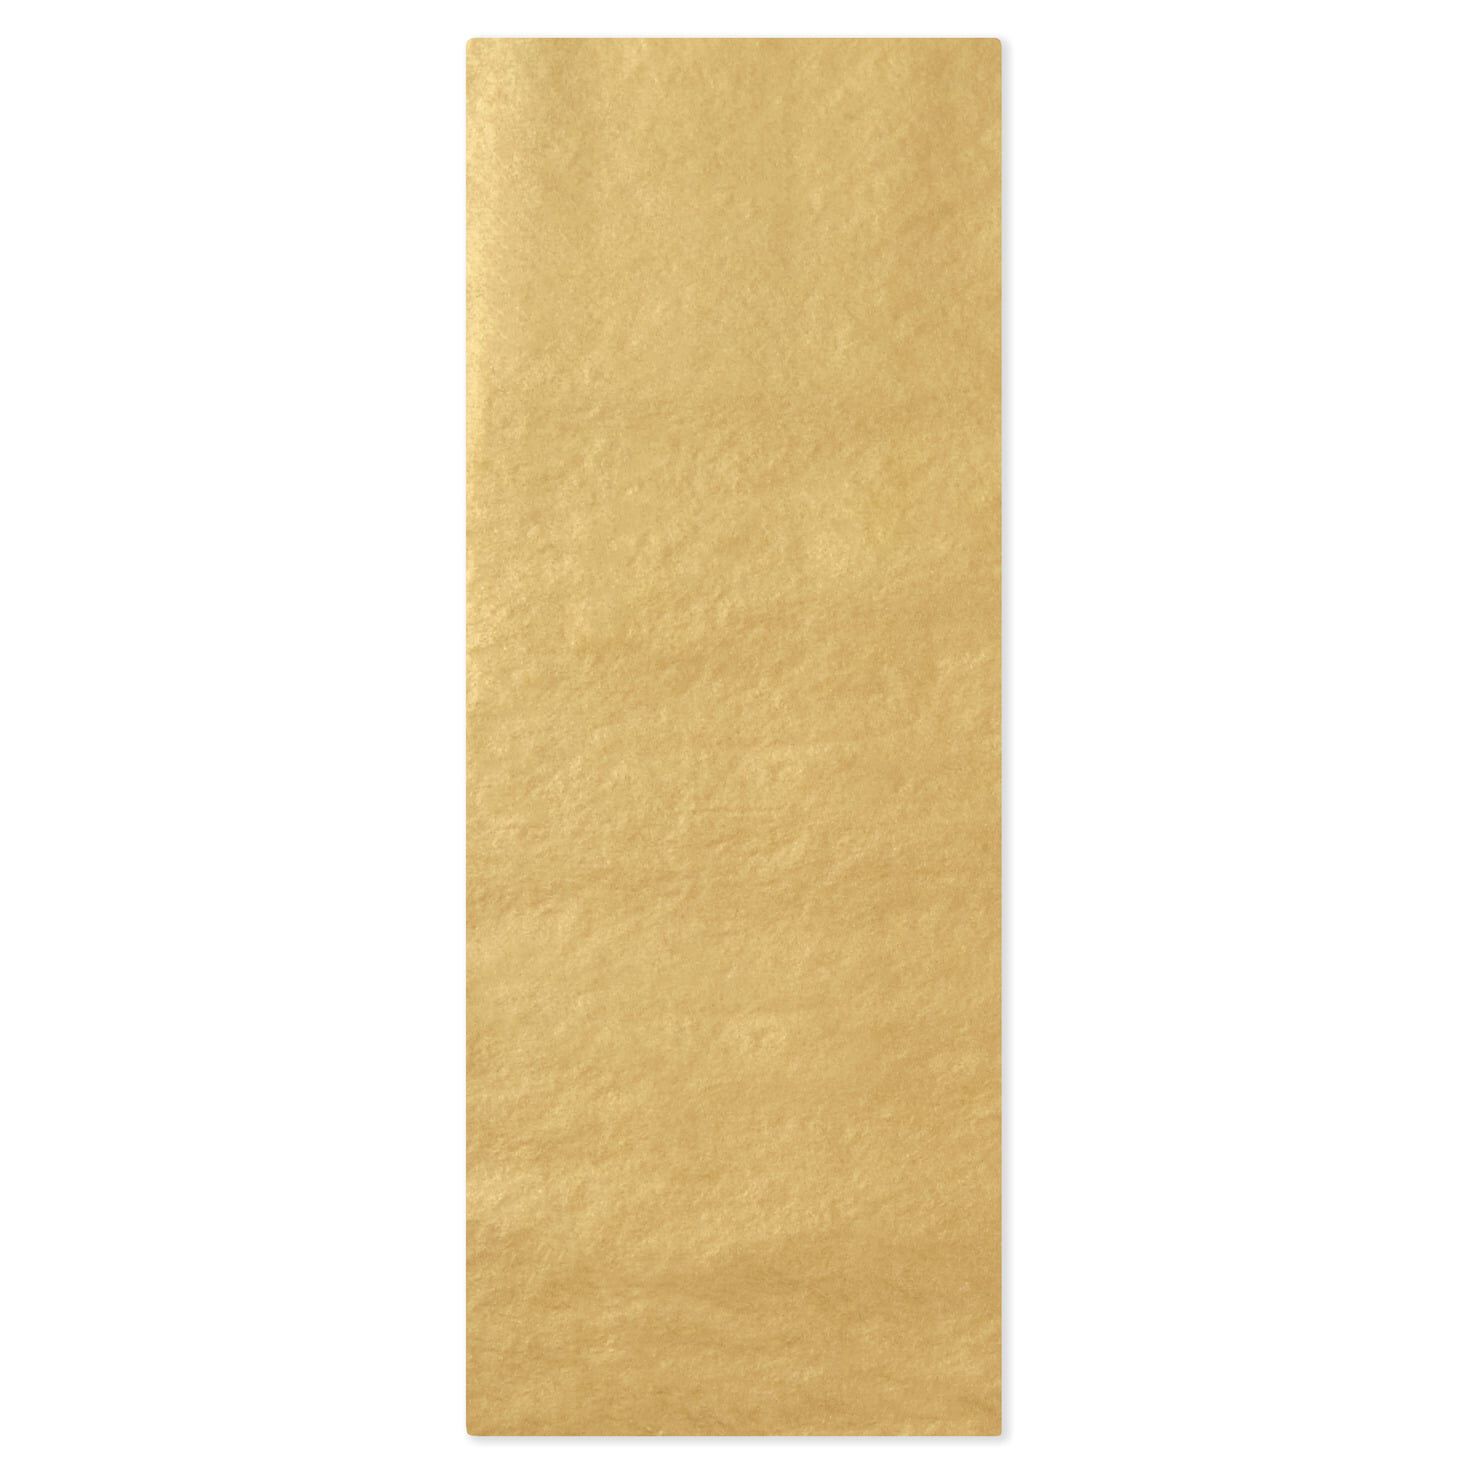 White Tissue Paper With Gold Glitter Edges, 4 Sheets - Tissue - Hallmark